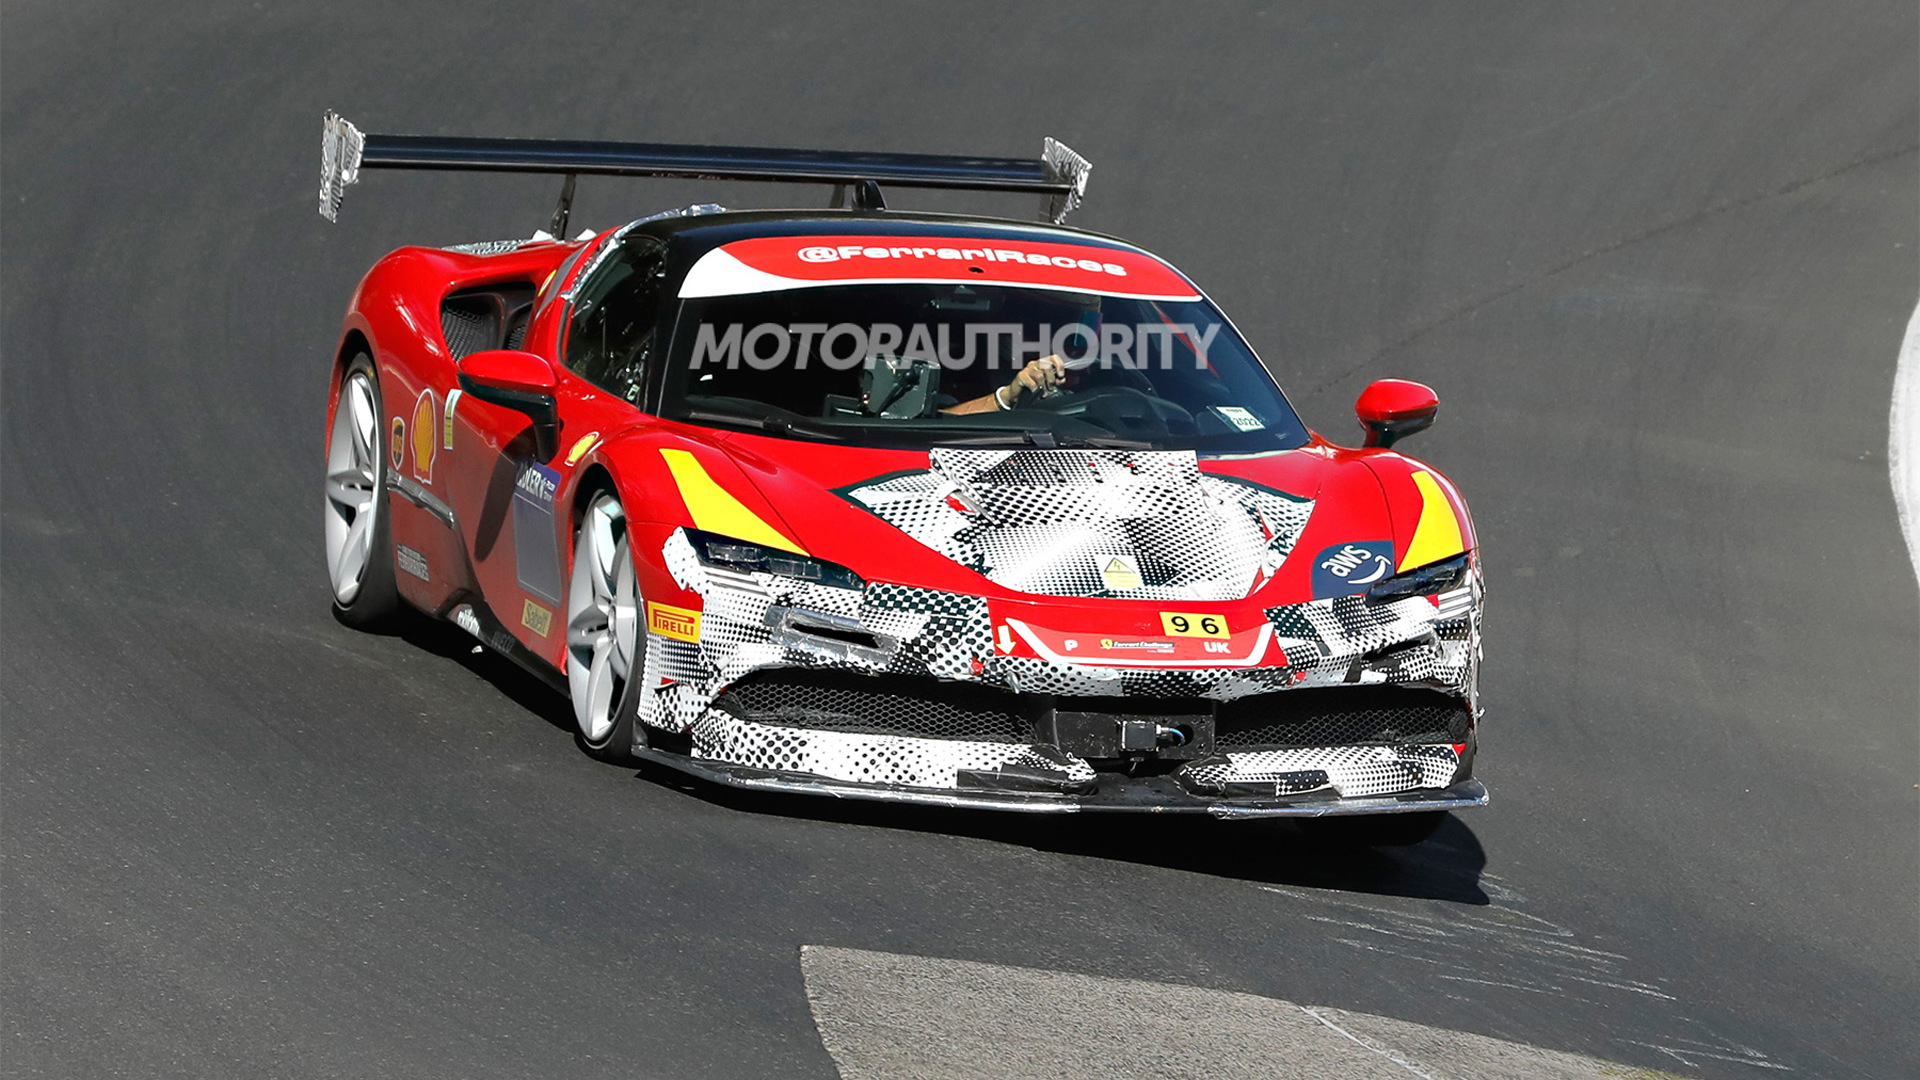 Ferrari SF90 Stradale race car spy shots - Photo credit: S. Baldauf/SB-Medien